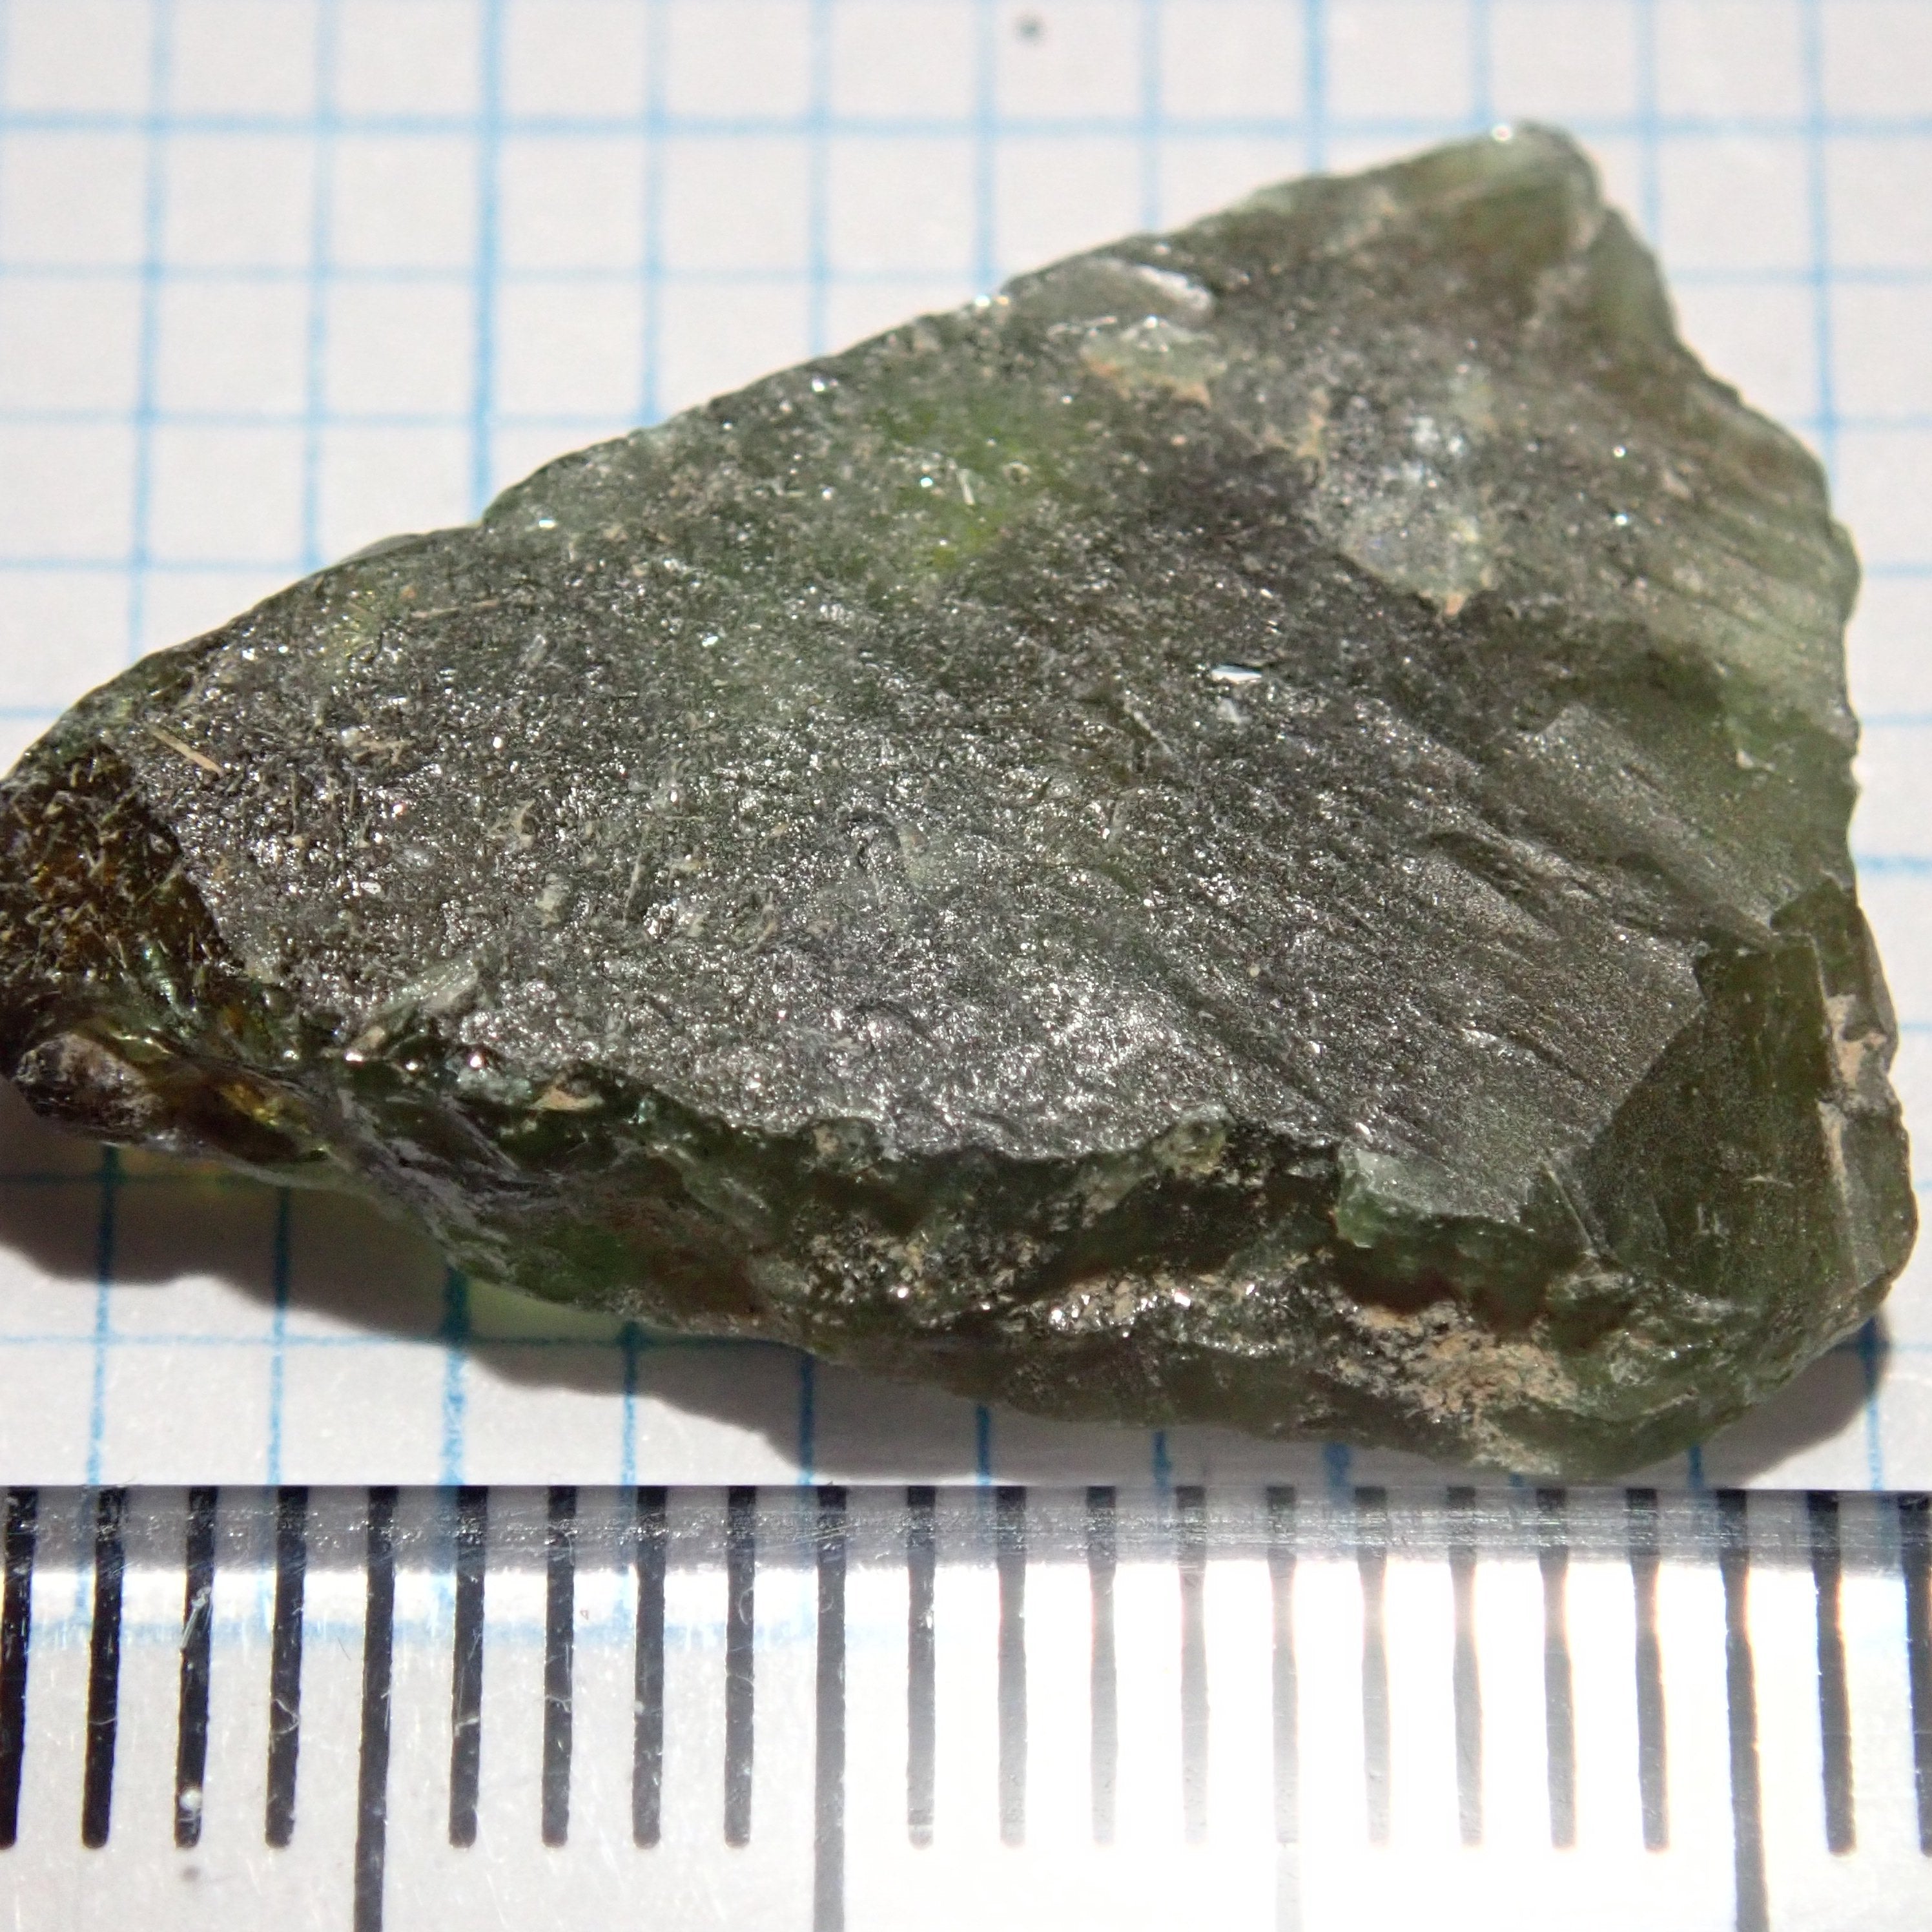 13.14Ct Chrome Sphene Crystal Tanzania Very Rare